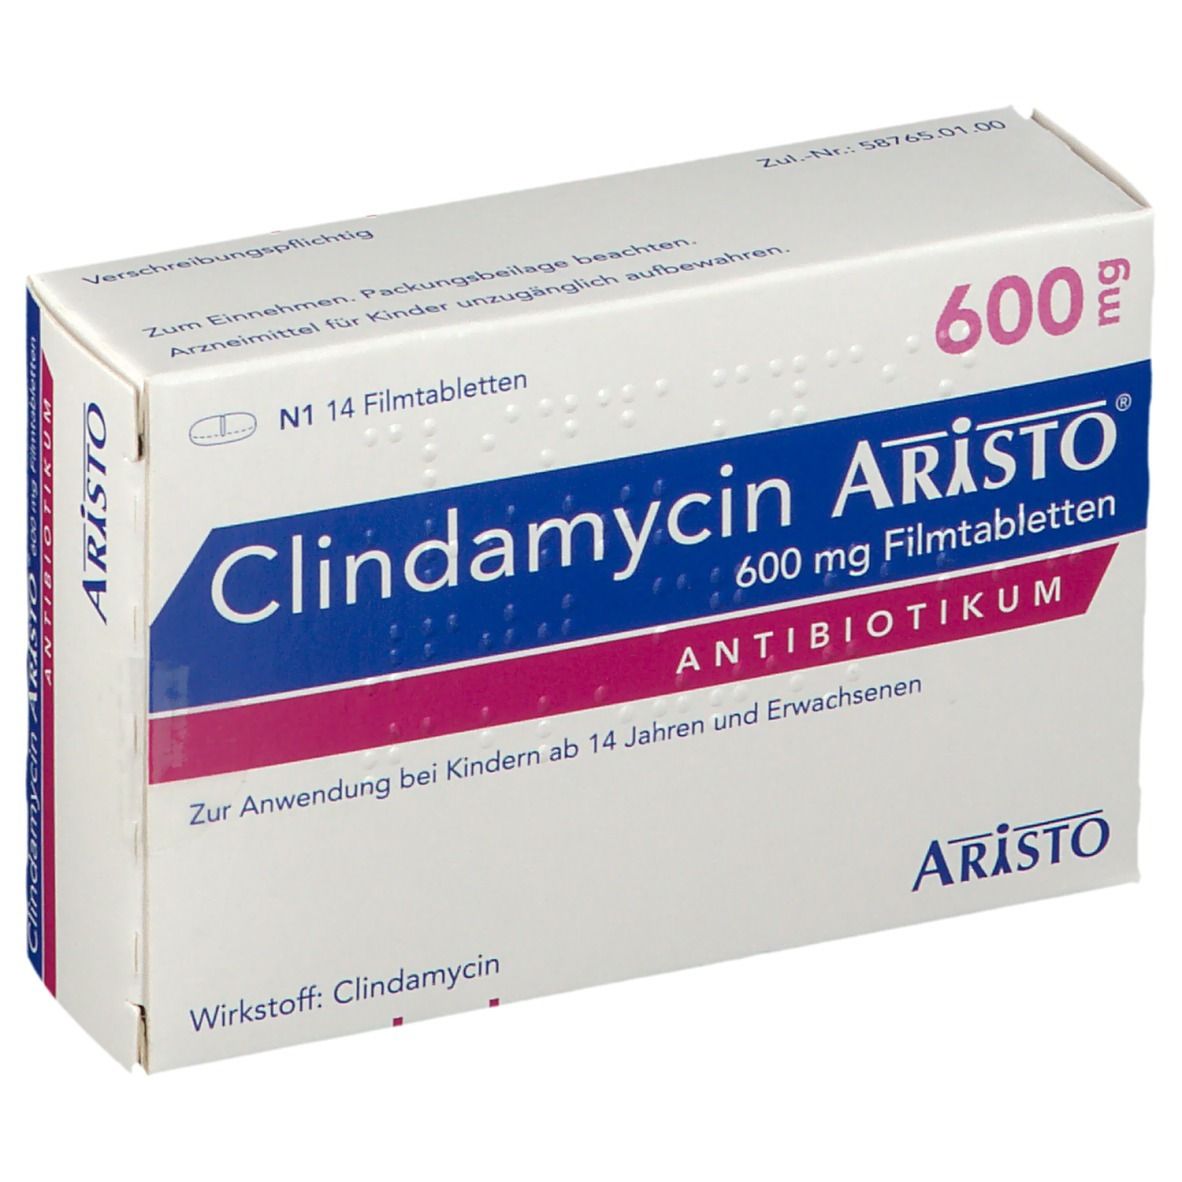 Clindamycin Aristo® 600 mg